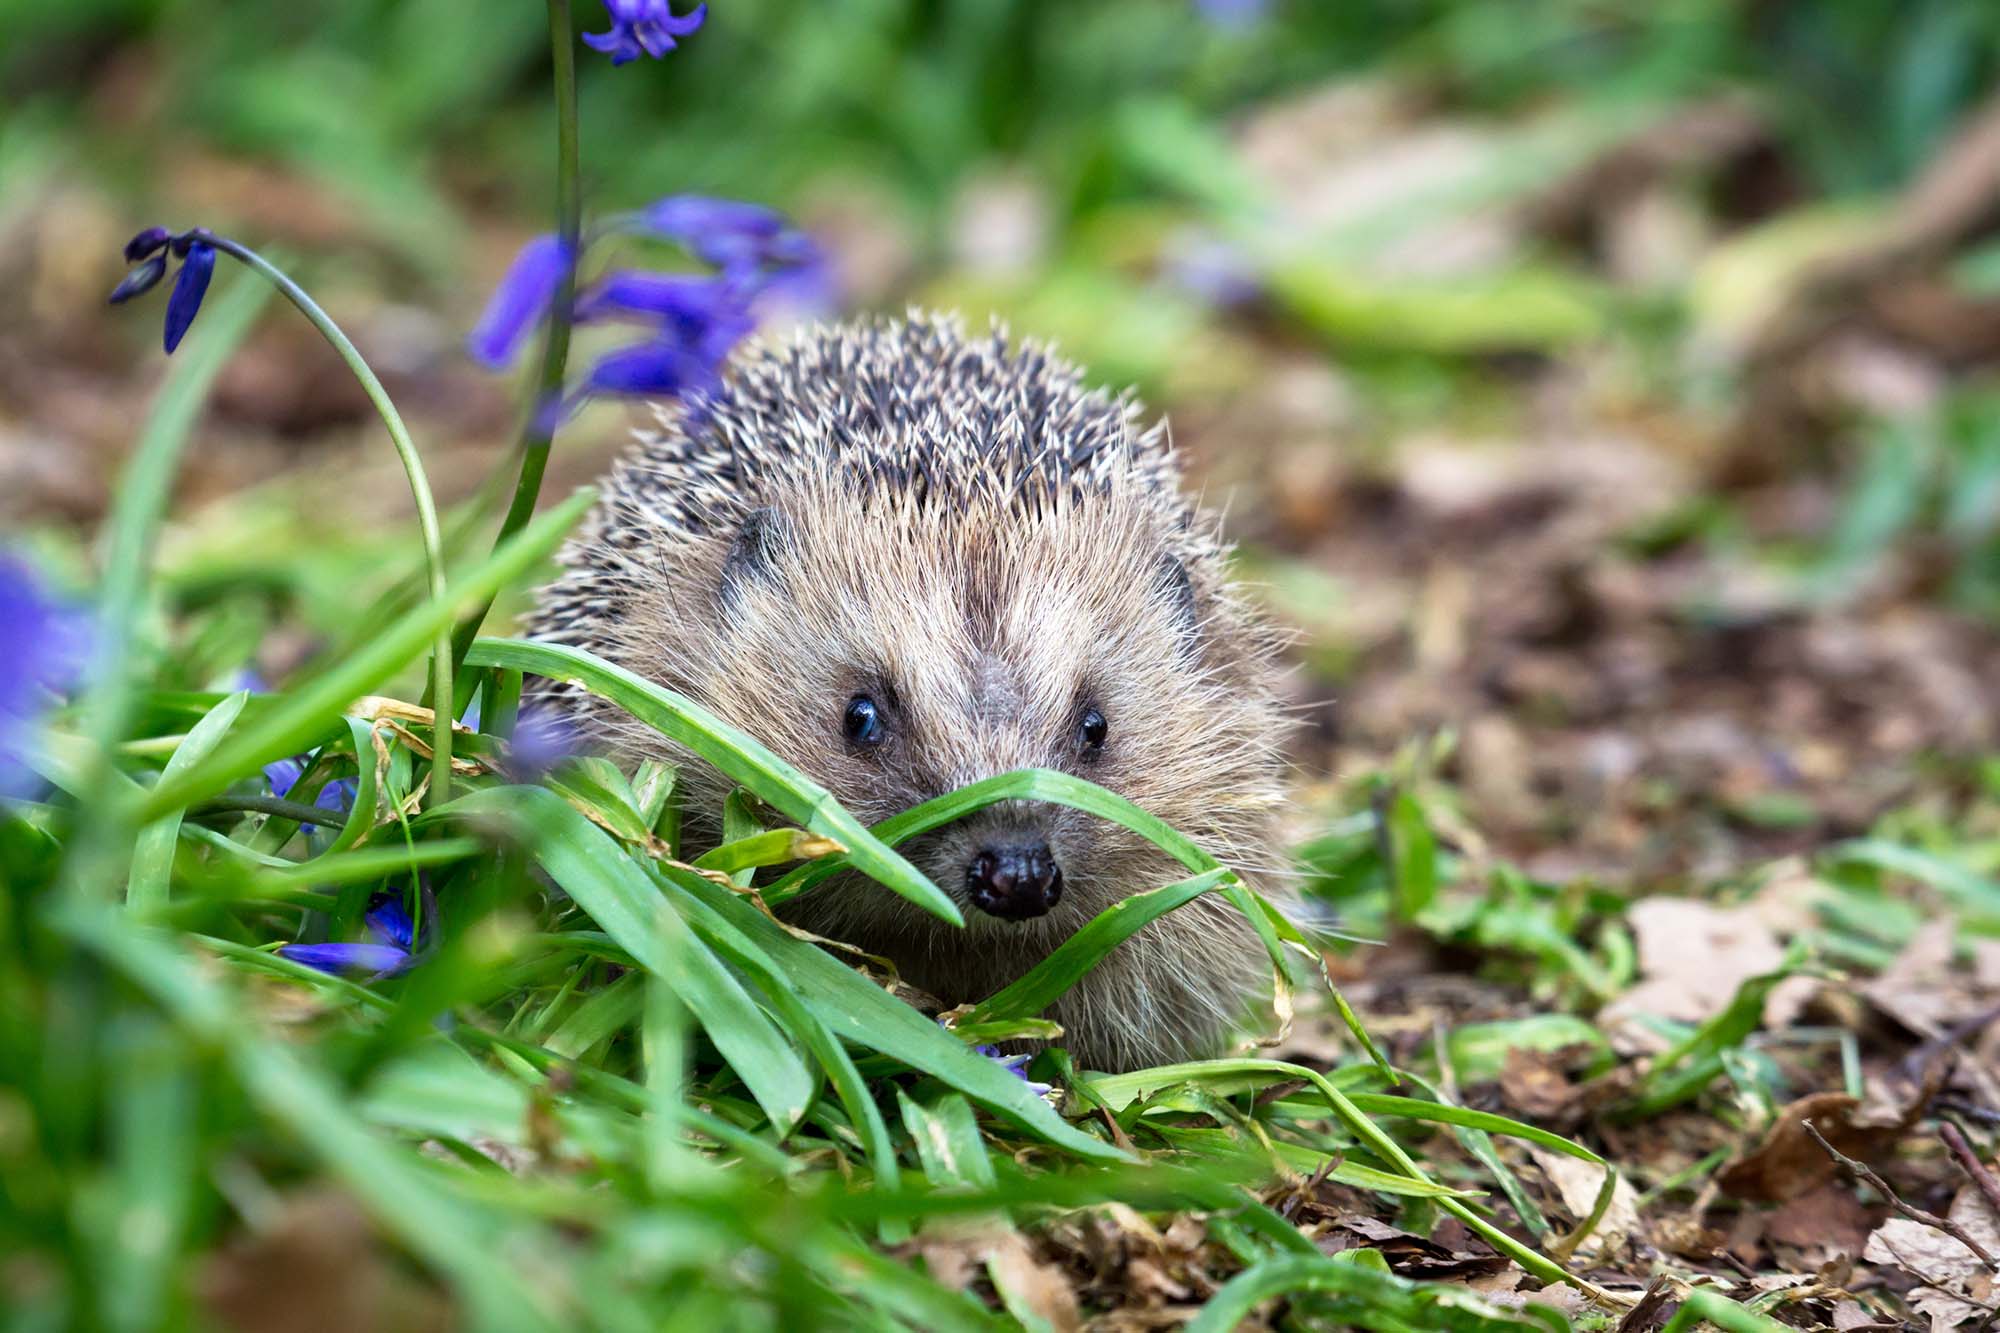 A hedgehog in a garden